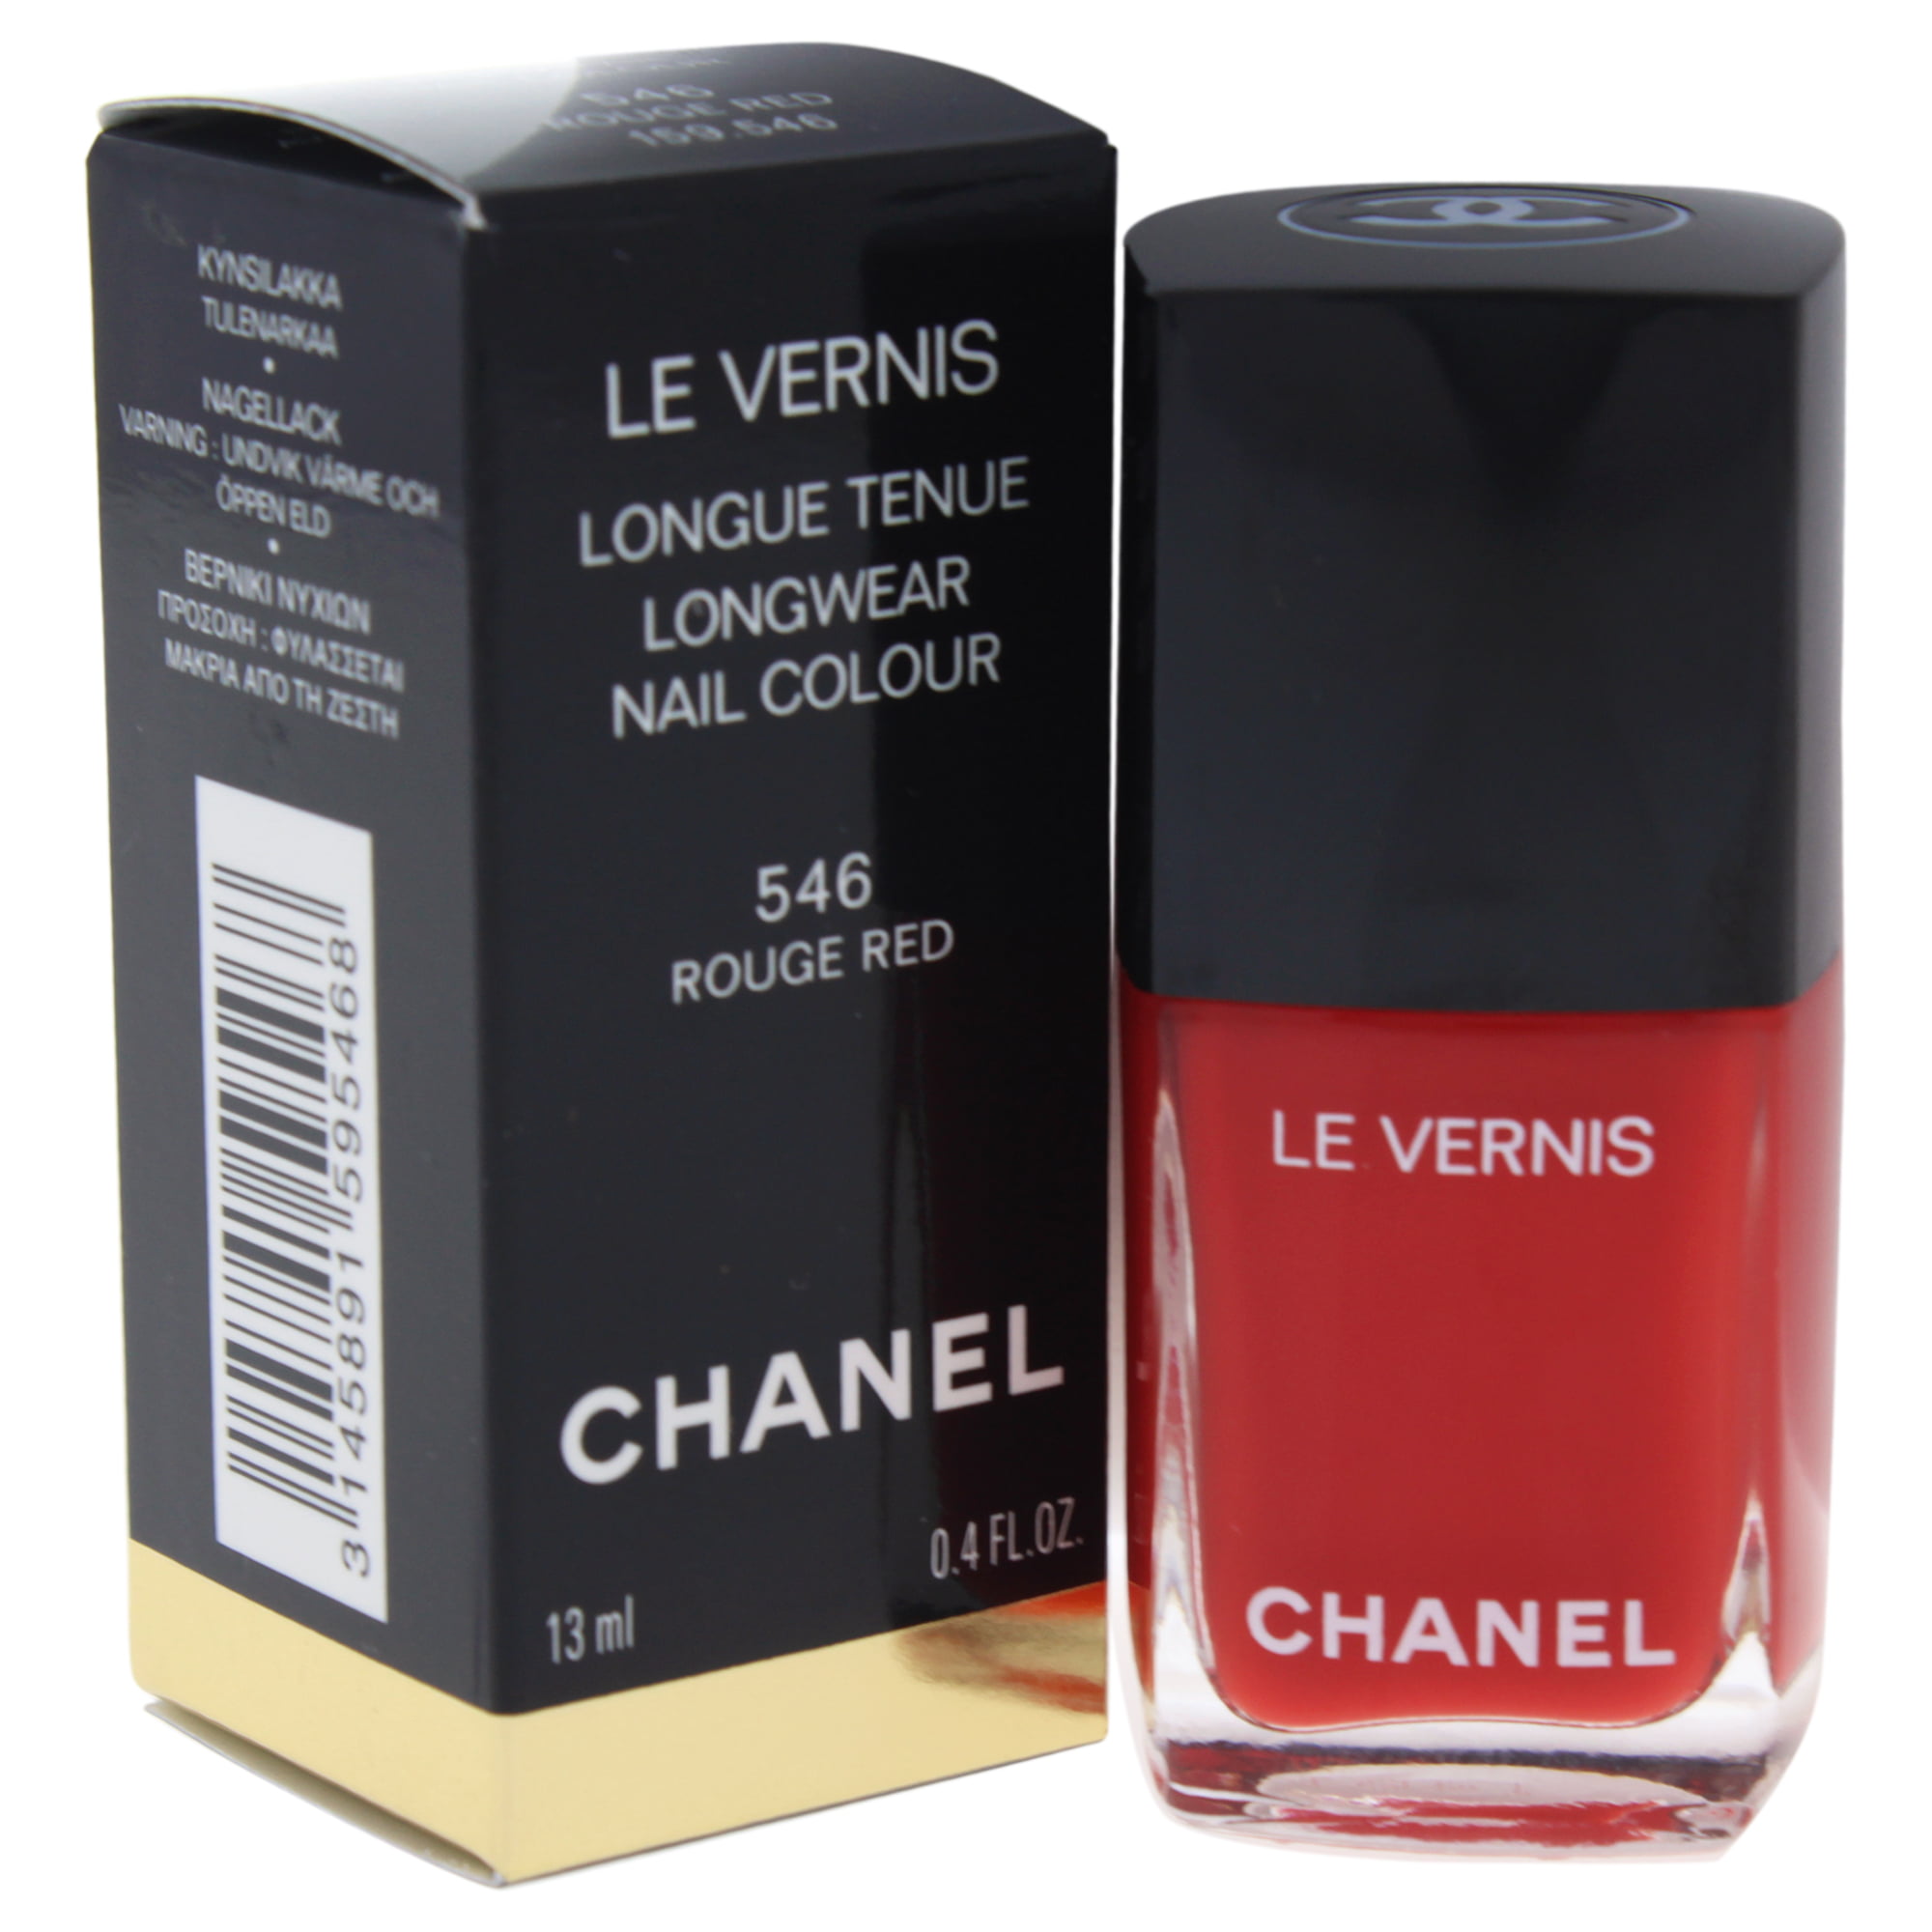 CHANEL - Chanel Le Vernis Longwear Nail Colour - 546 Rouge Red 0.4 oz ...